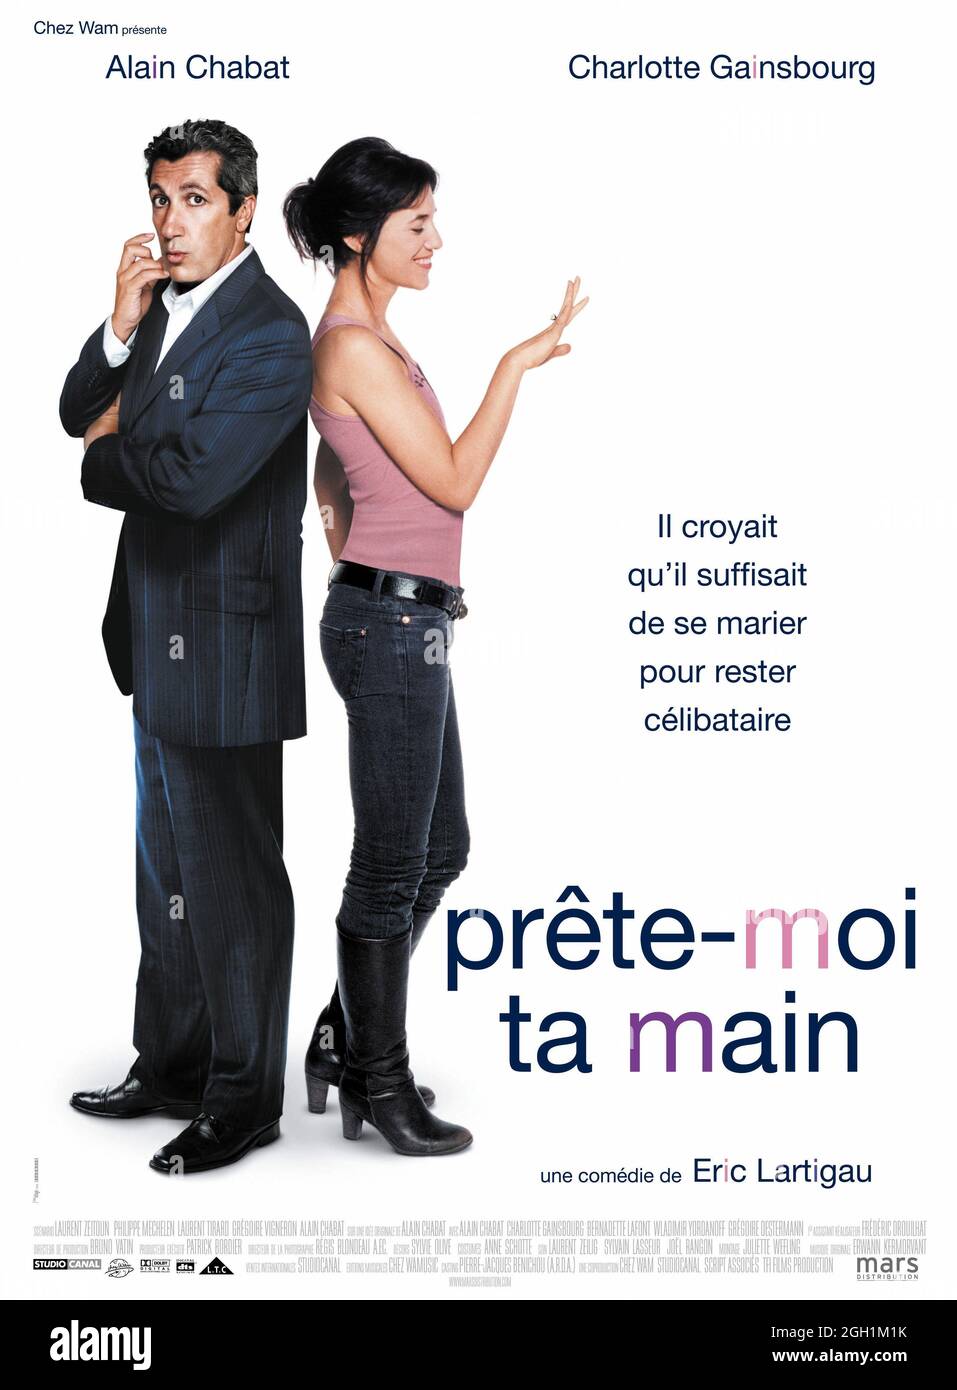 PRETE-MOI TA MAIN (2006), directed by ERIC LARTIGAU. Credit: STUDIOCANAL / Album Stock Photo